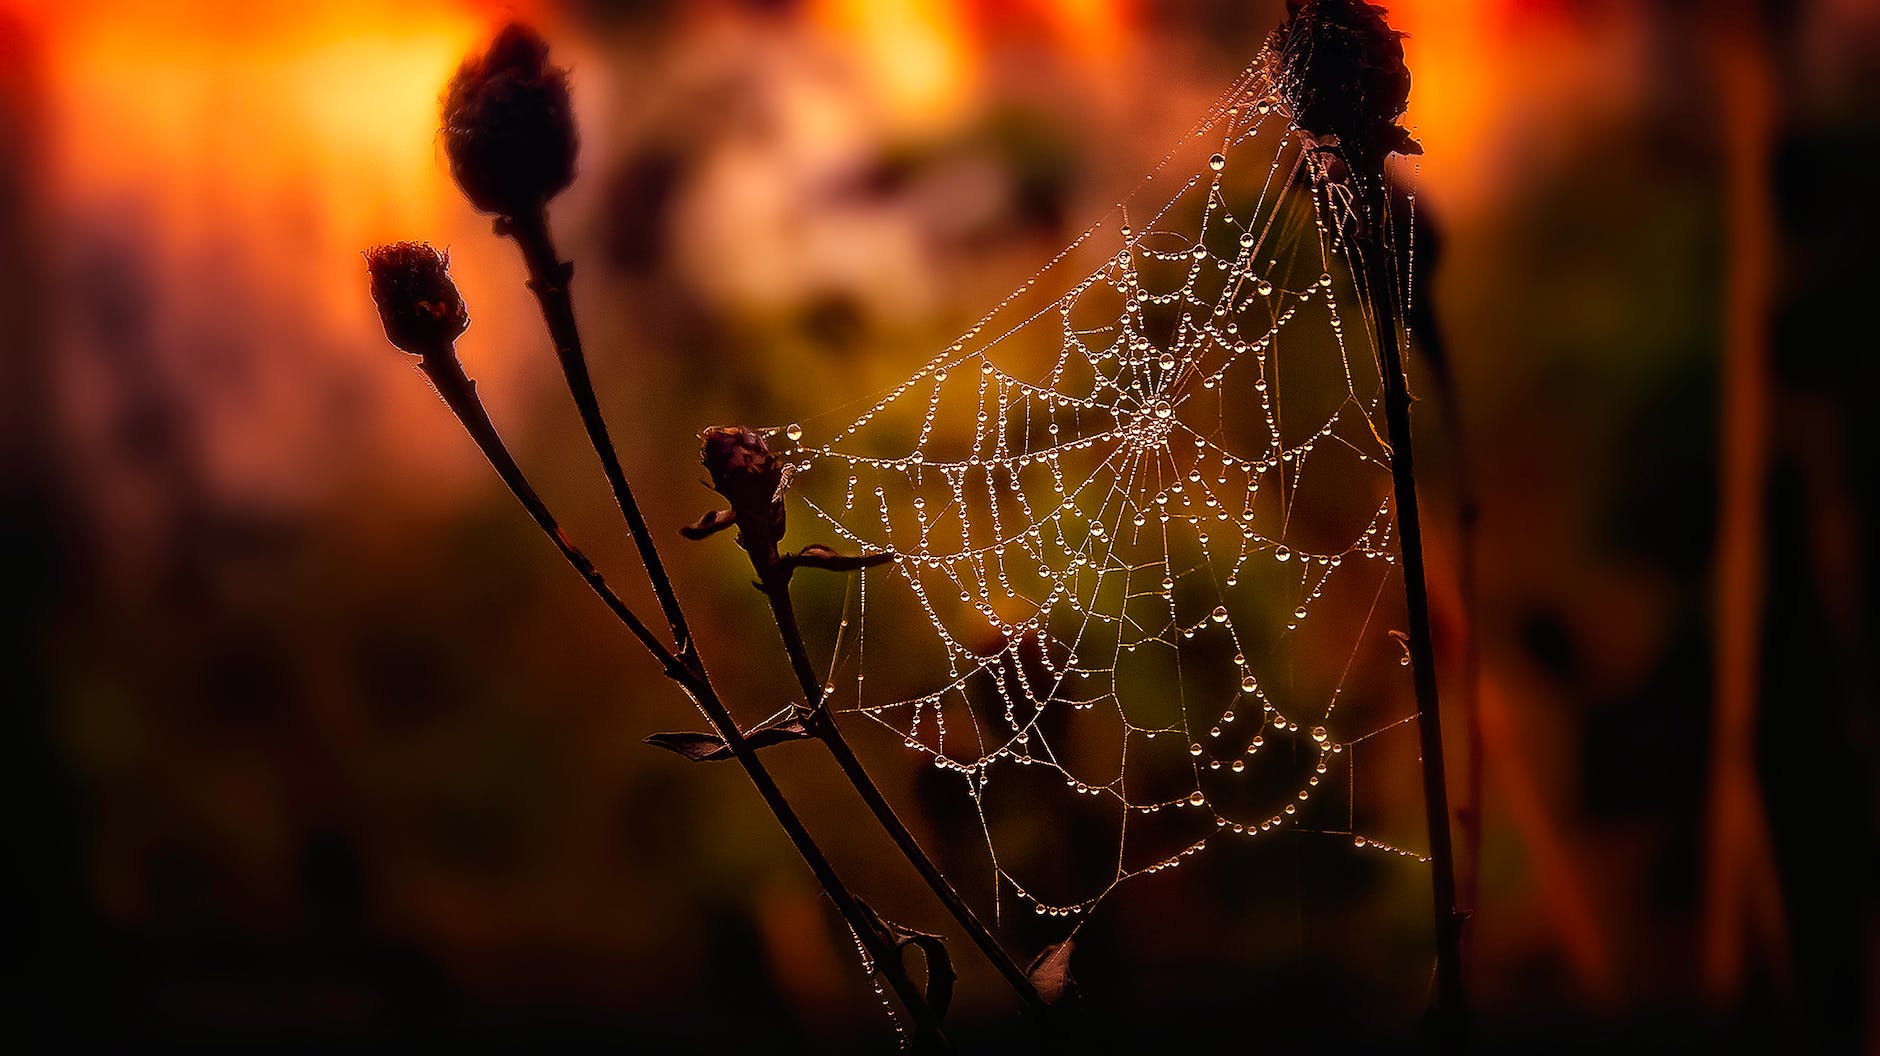 Spiders' web between plant stalks, backlit with dimly lit orange toned sunset, or sunrise.